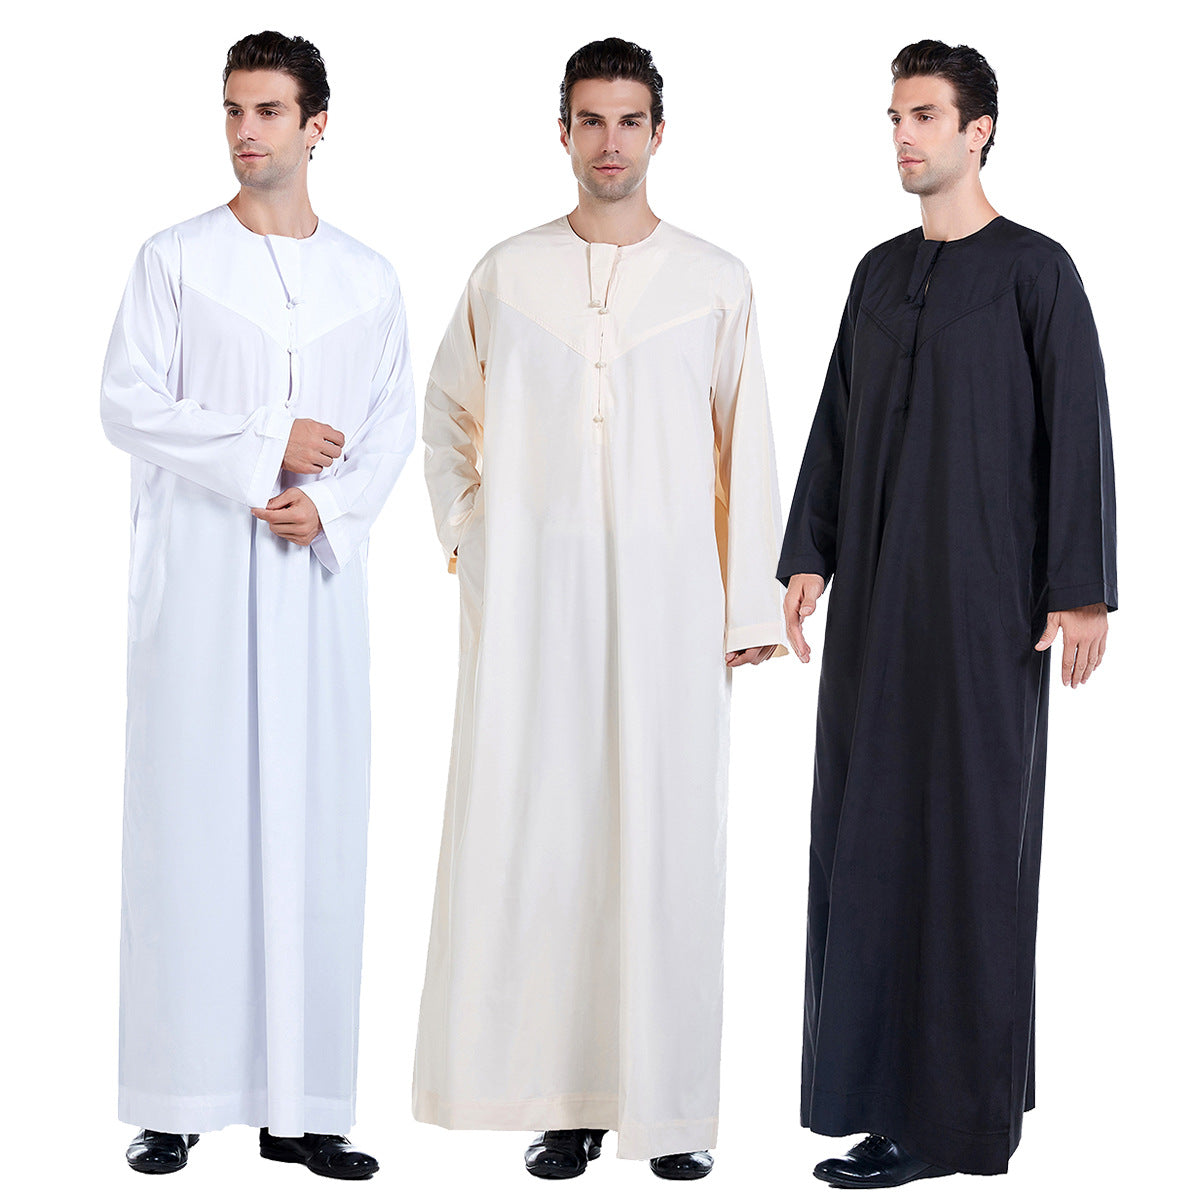 Thobe Arab Muslim Garb Middle Eastern Men's Robe Thobe Prayer Garment Wedding Attire Juma Juma'a Prayer Outfit Ms. Leah's Place